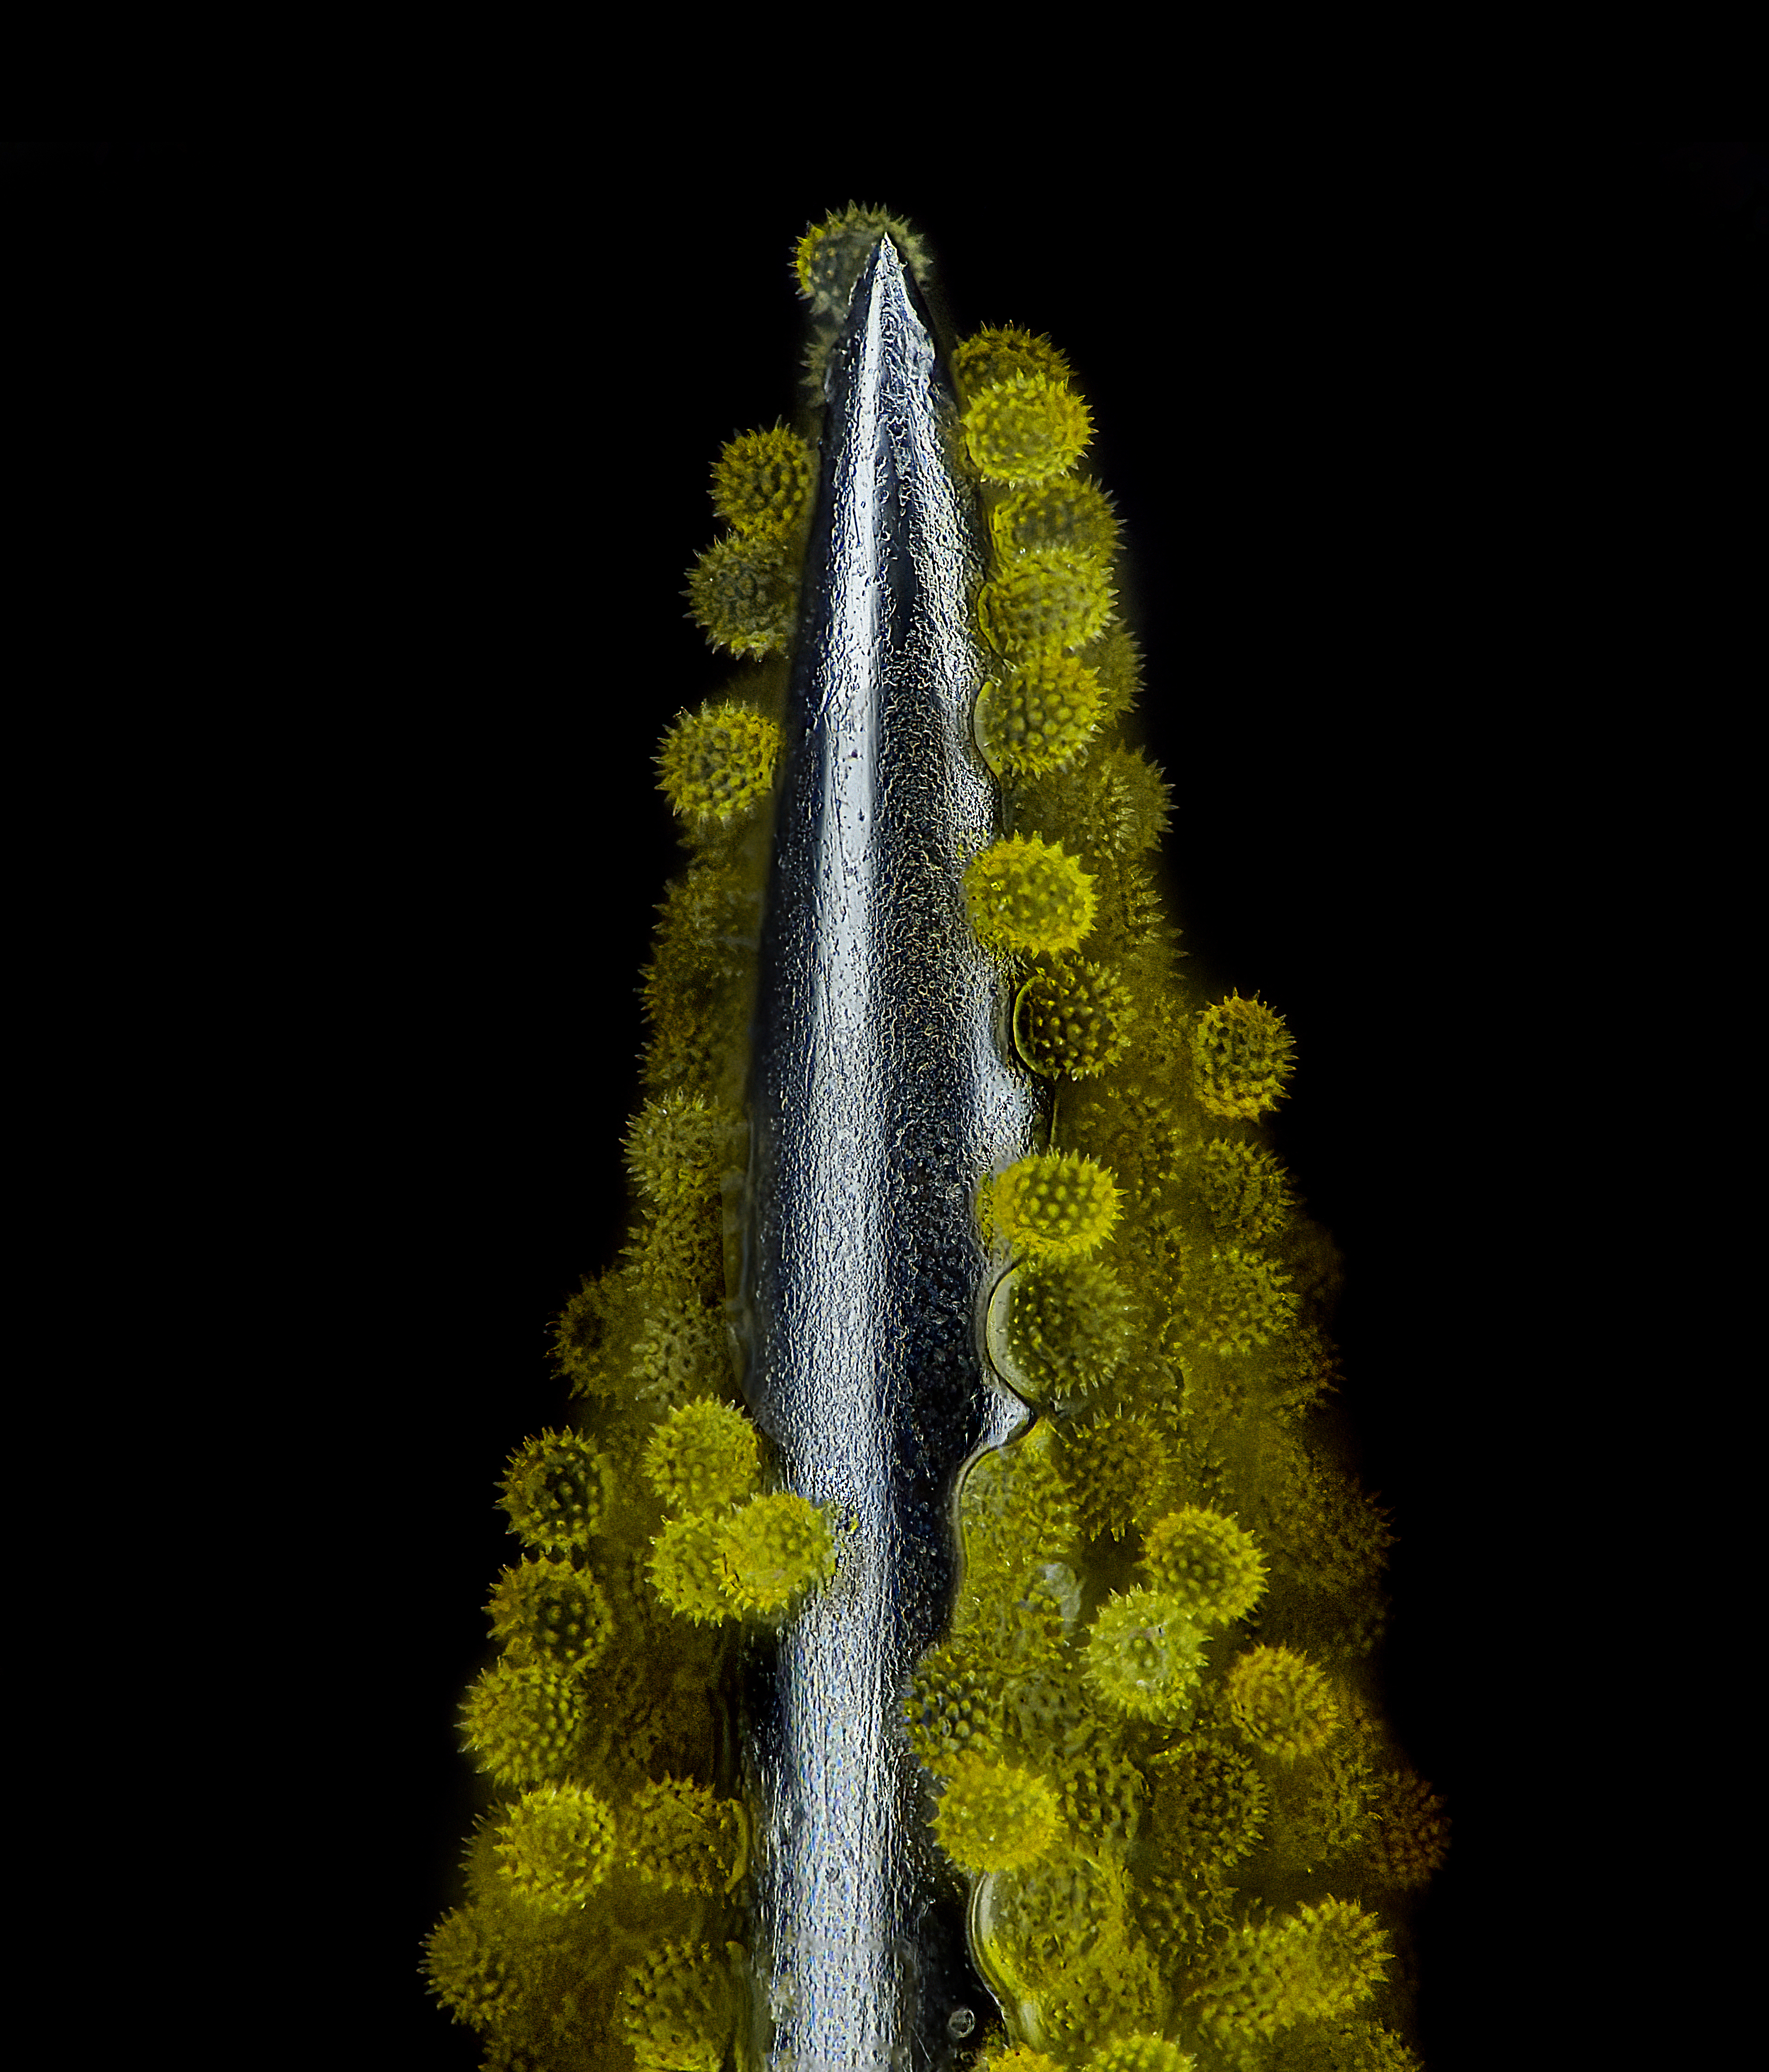 Yellow sunflower pollen on a grey needle